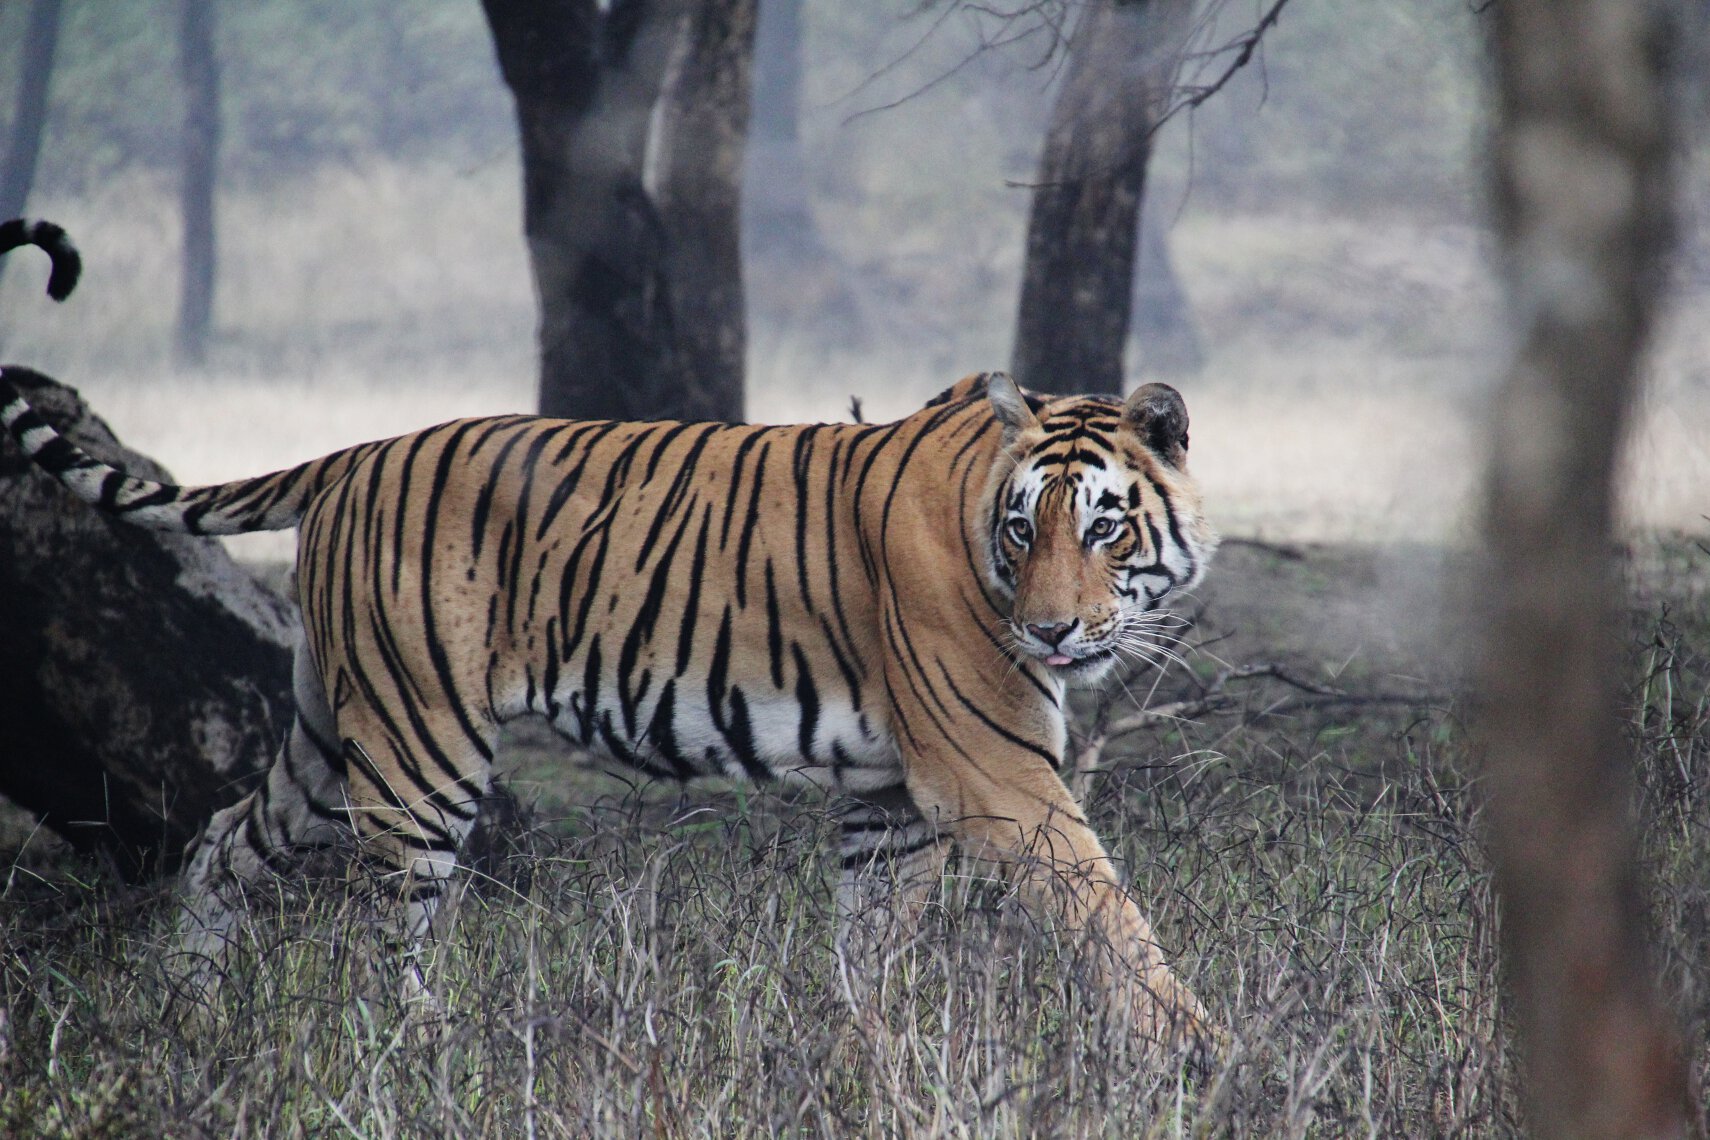 Tiger T17 saunters through Ranthambore National Park, India.